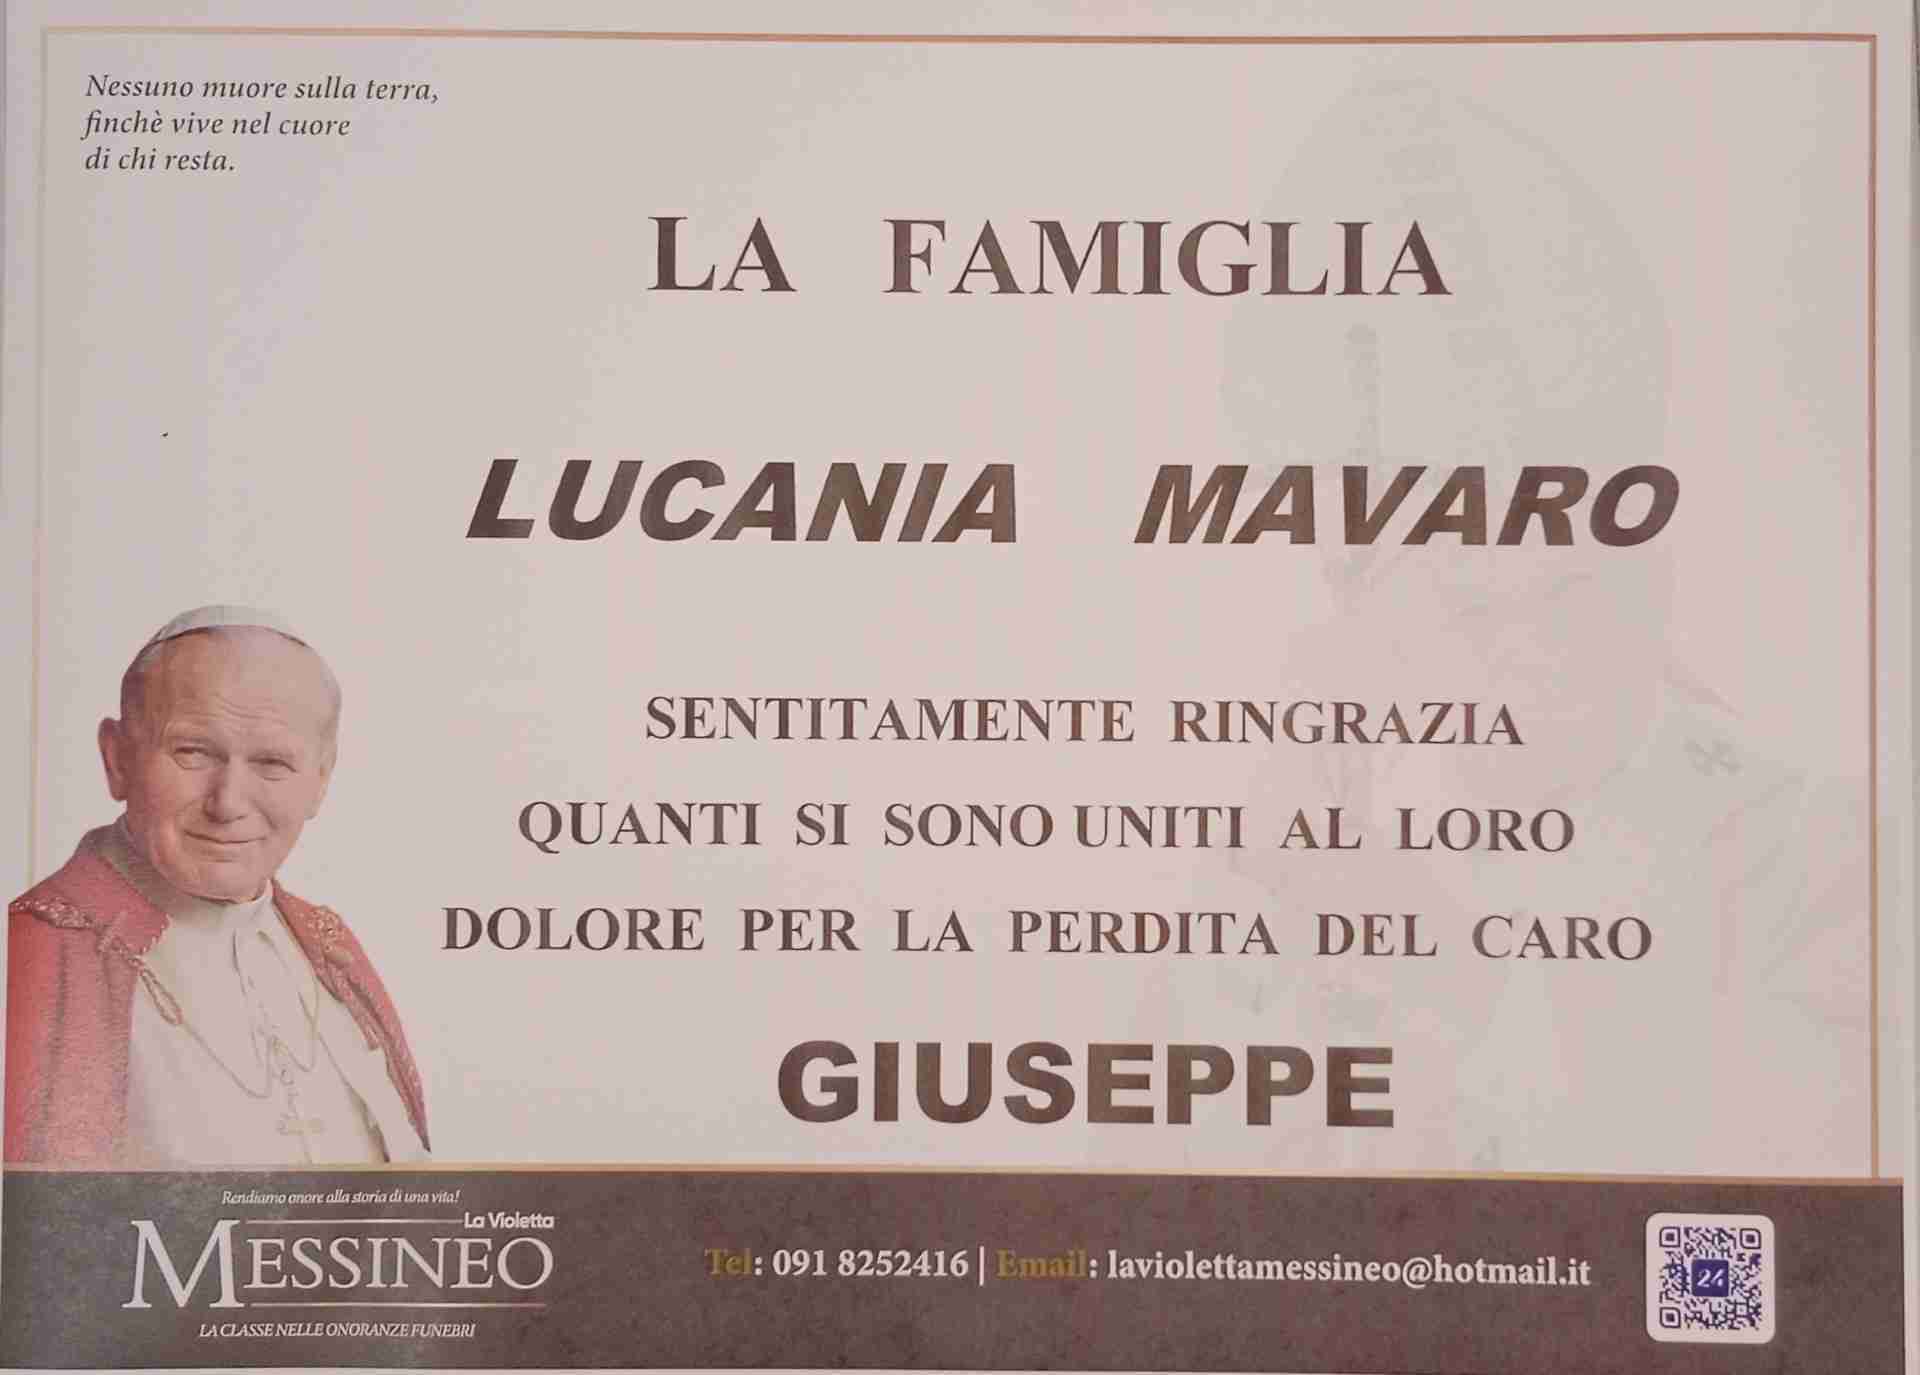 Giuseppe Lucania